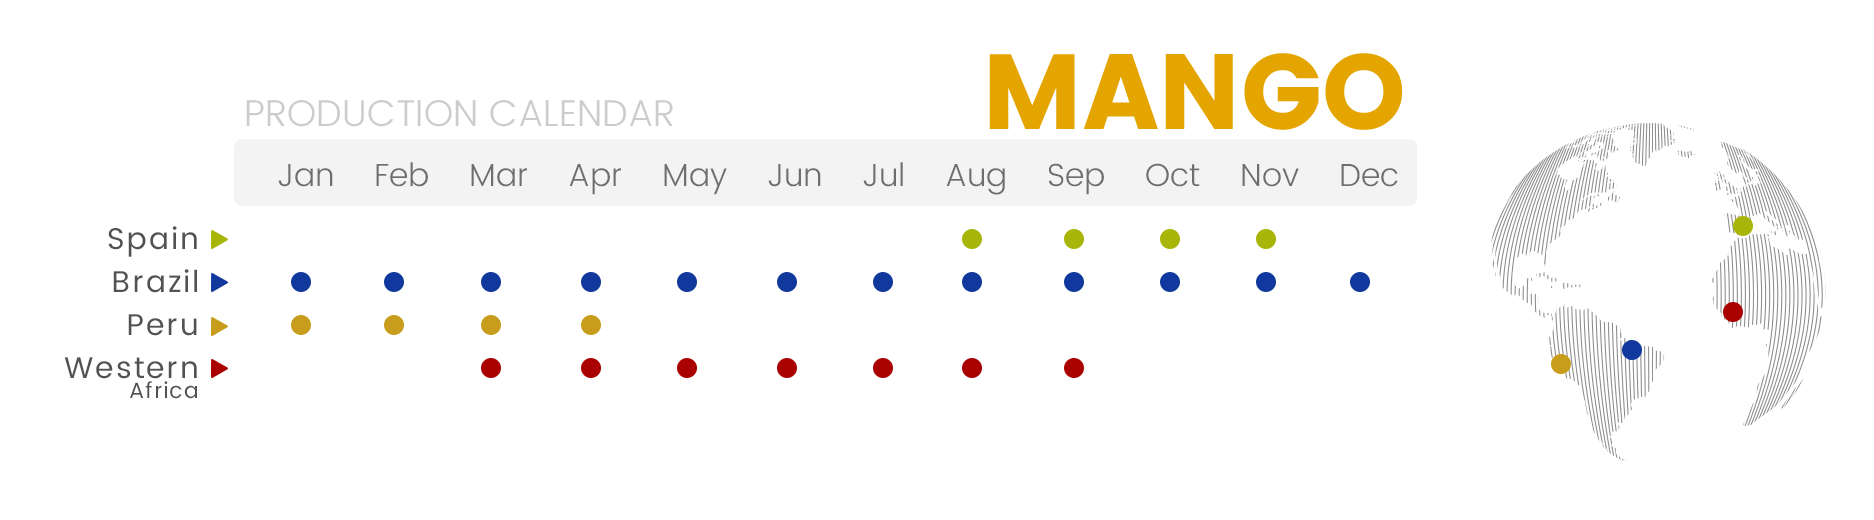 Production calendar | Mango NatureTasty